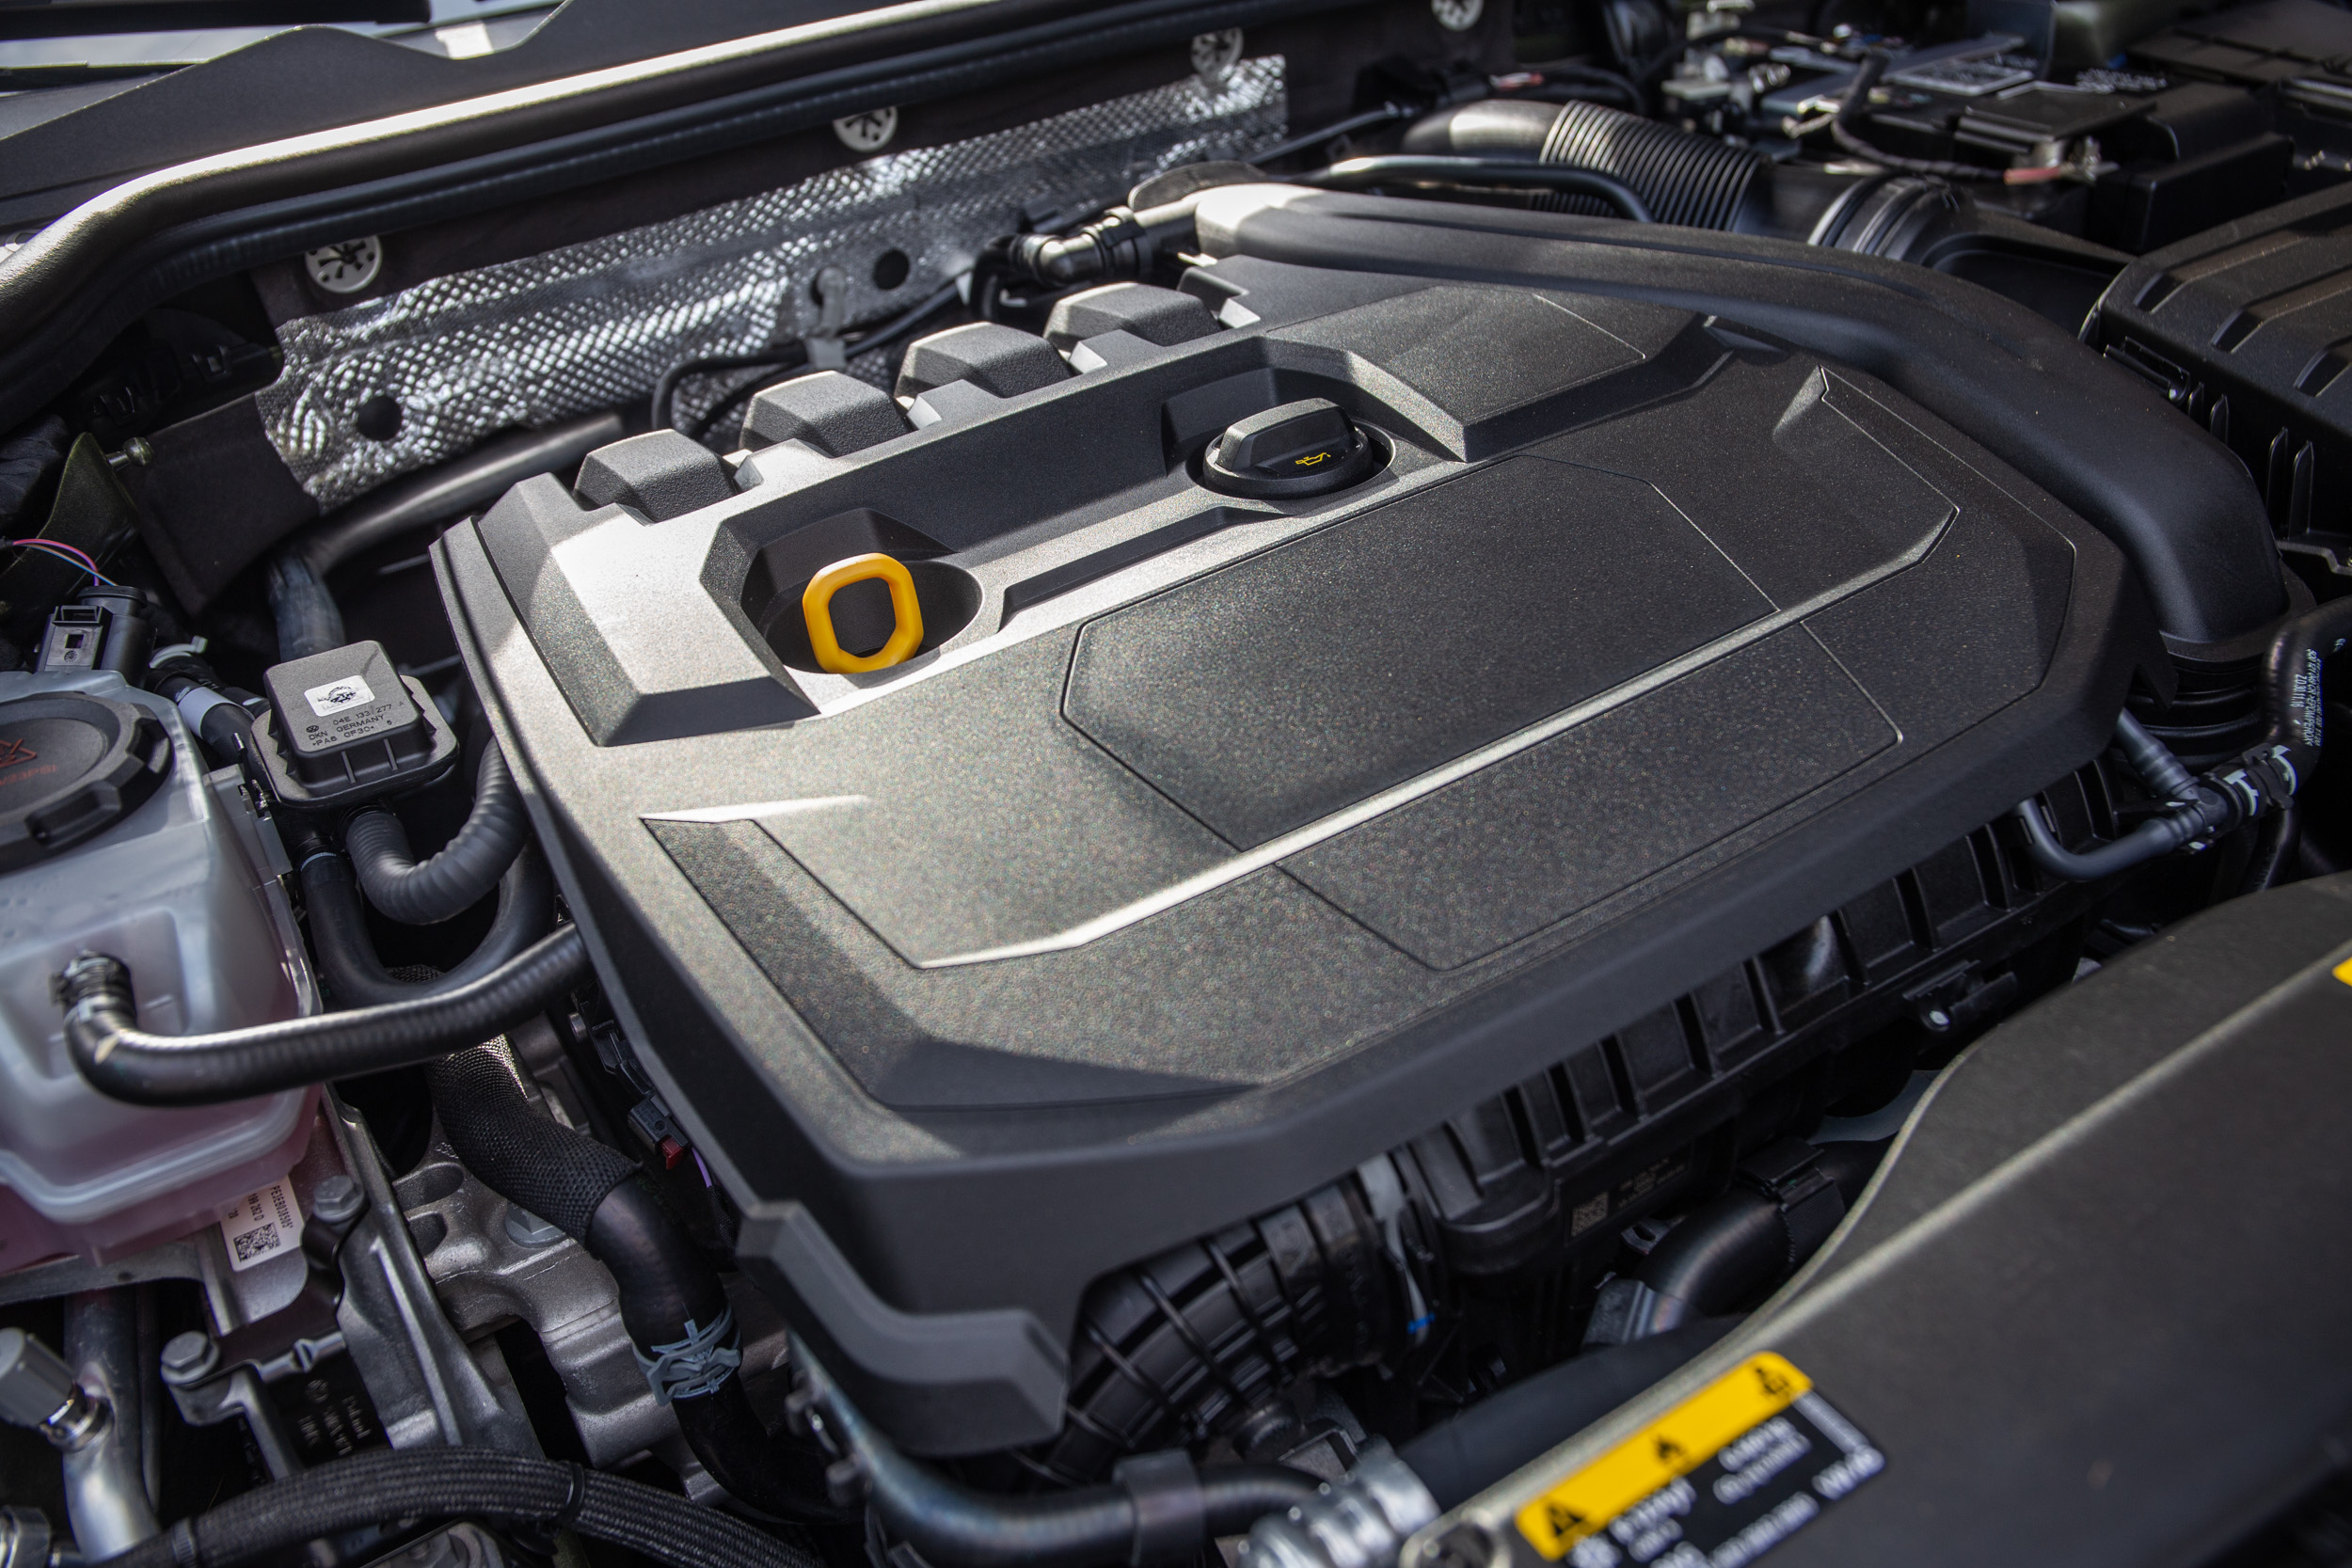 Golf 280 eTSI R-Line 搭載 1.5 升渦輪增壓直列四缸汽油引擎，具備 150ps / 5000~6000rpm 最大馬力與 25.5kgm / 1500~3500rpm 最大扭力輸出。